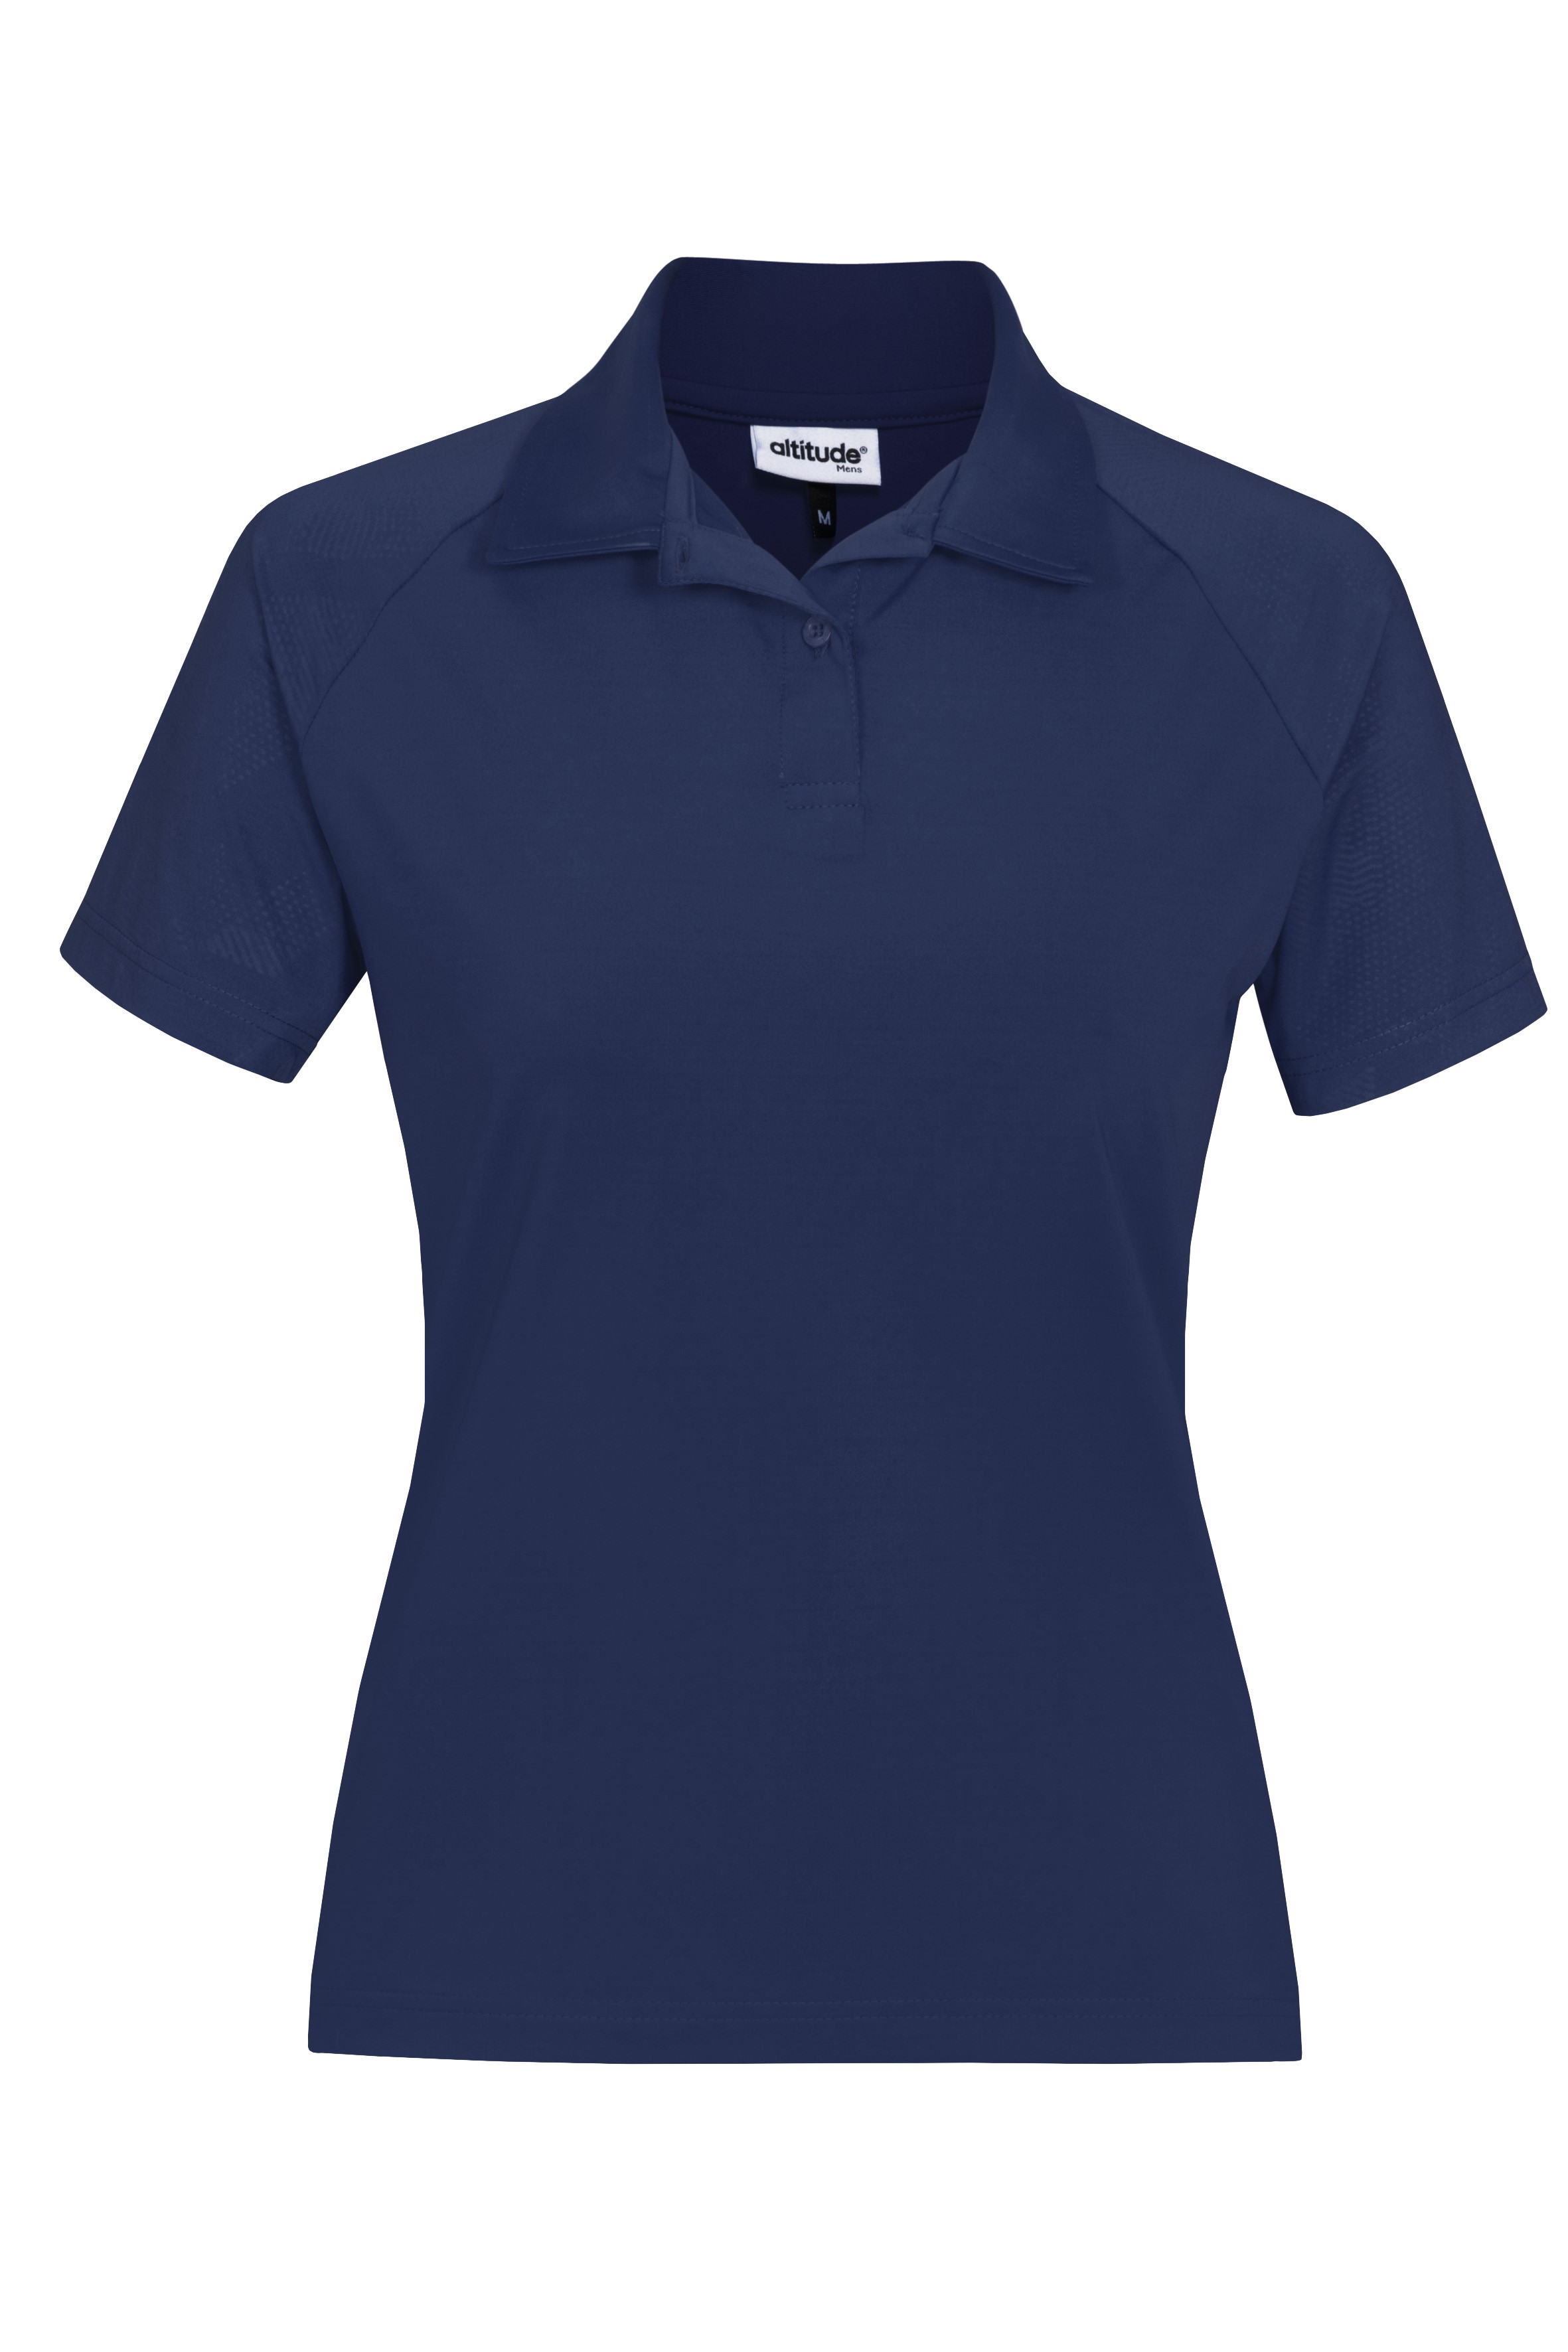 Ladies Santorini Golf Shirt